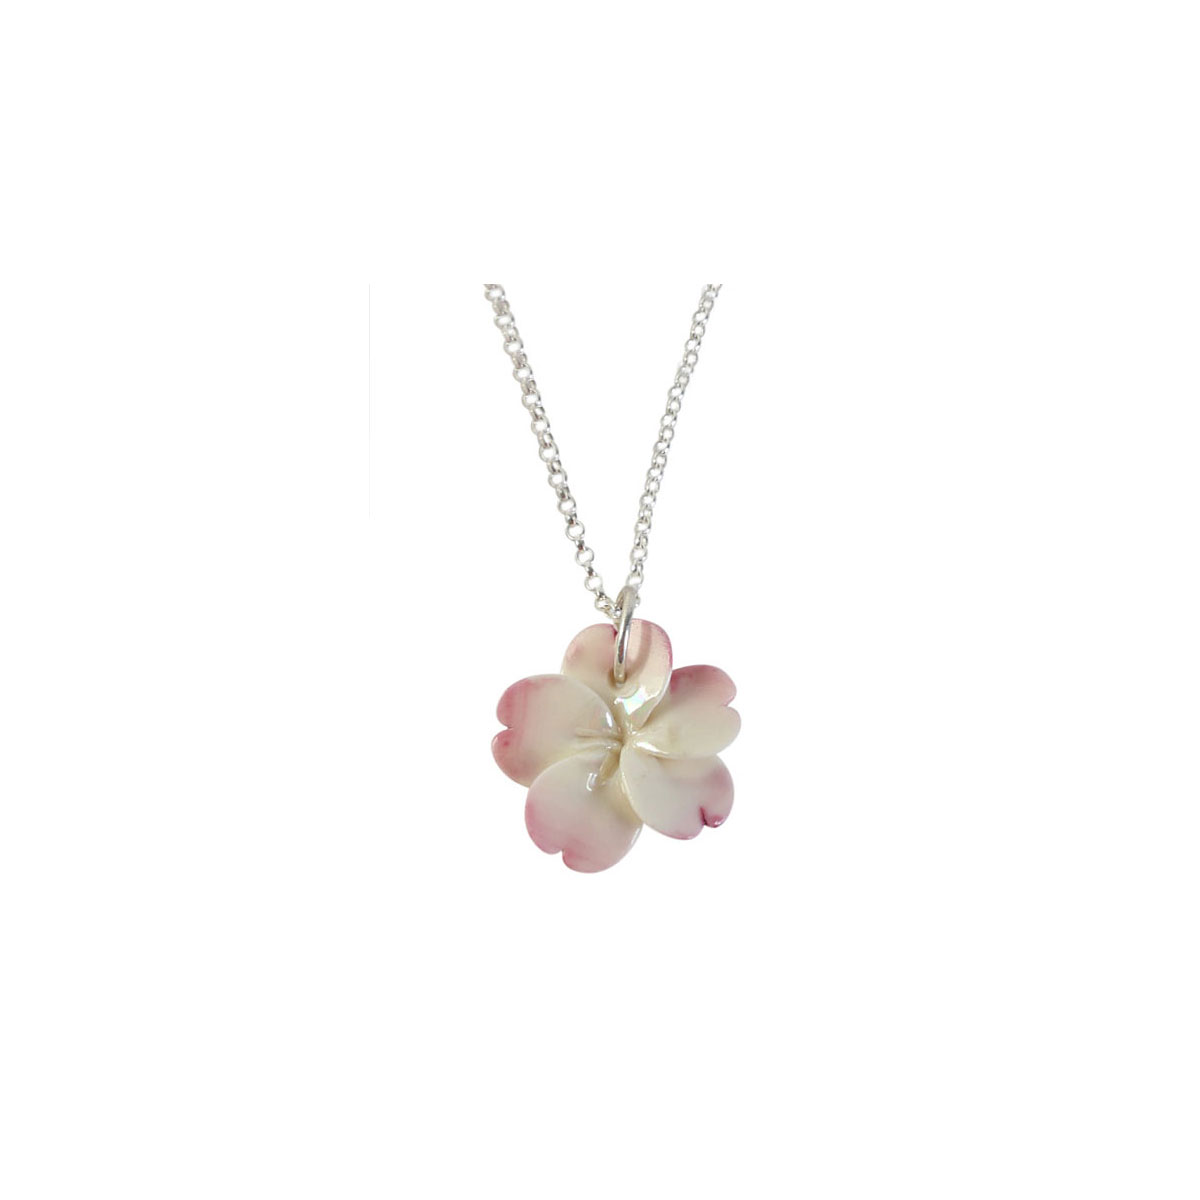 Belleek Porcelain Jewelry Plumeria Necklace Pink